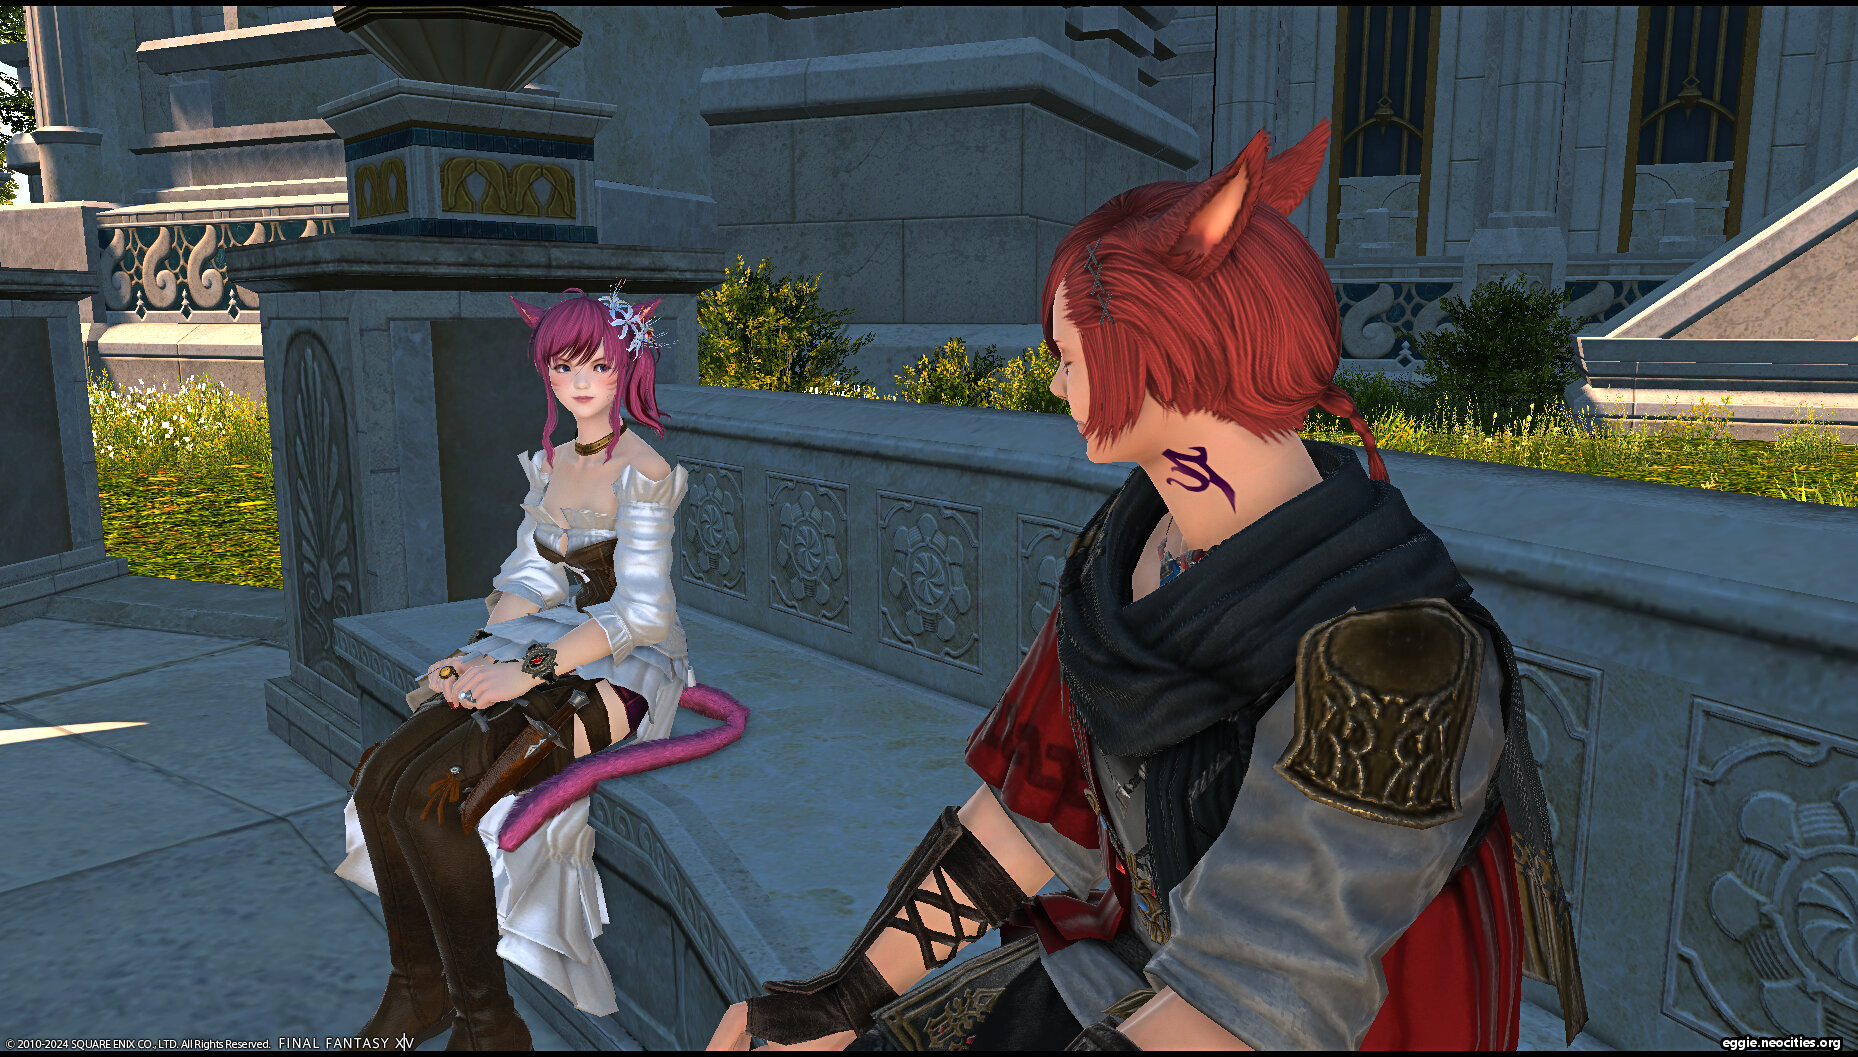 A cutscene screenshot of Zel and G'raha sitting down. Zel is smiling at G'raha.